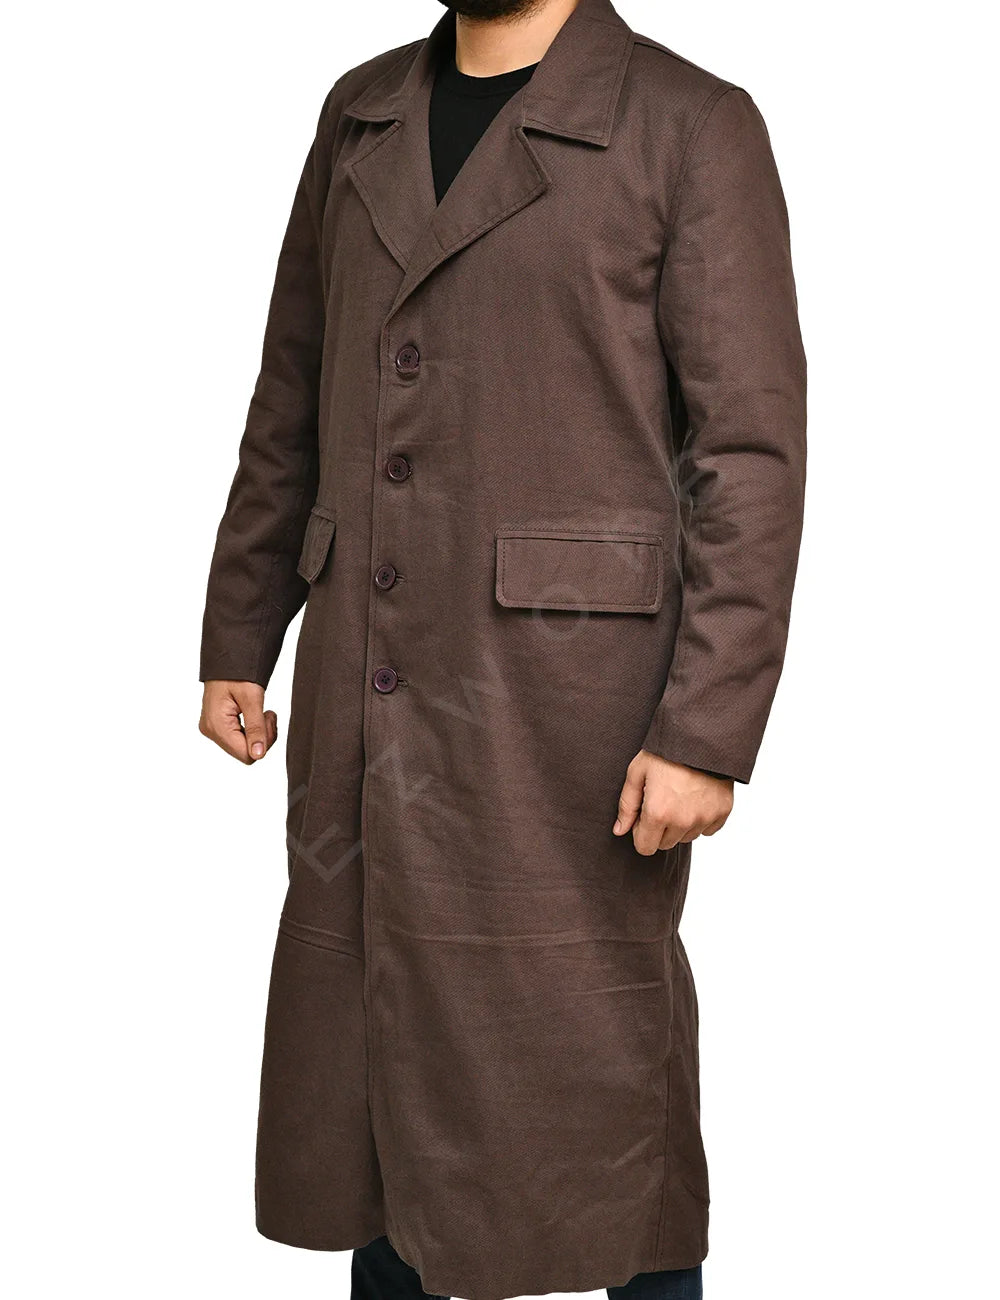 Mens Brown Wool Trench Coat